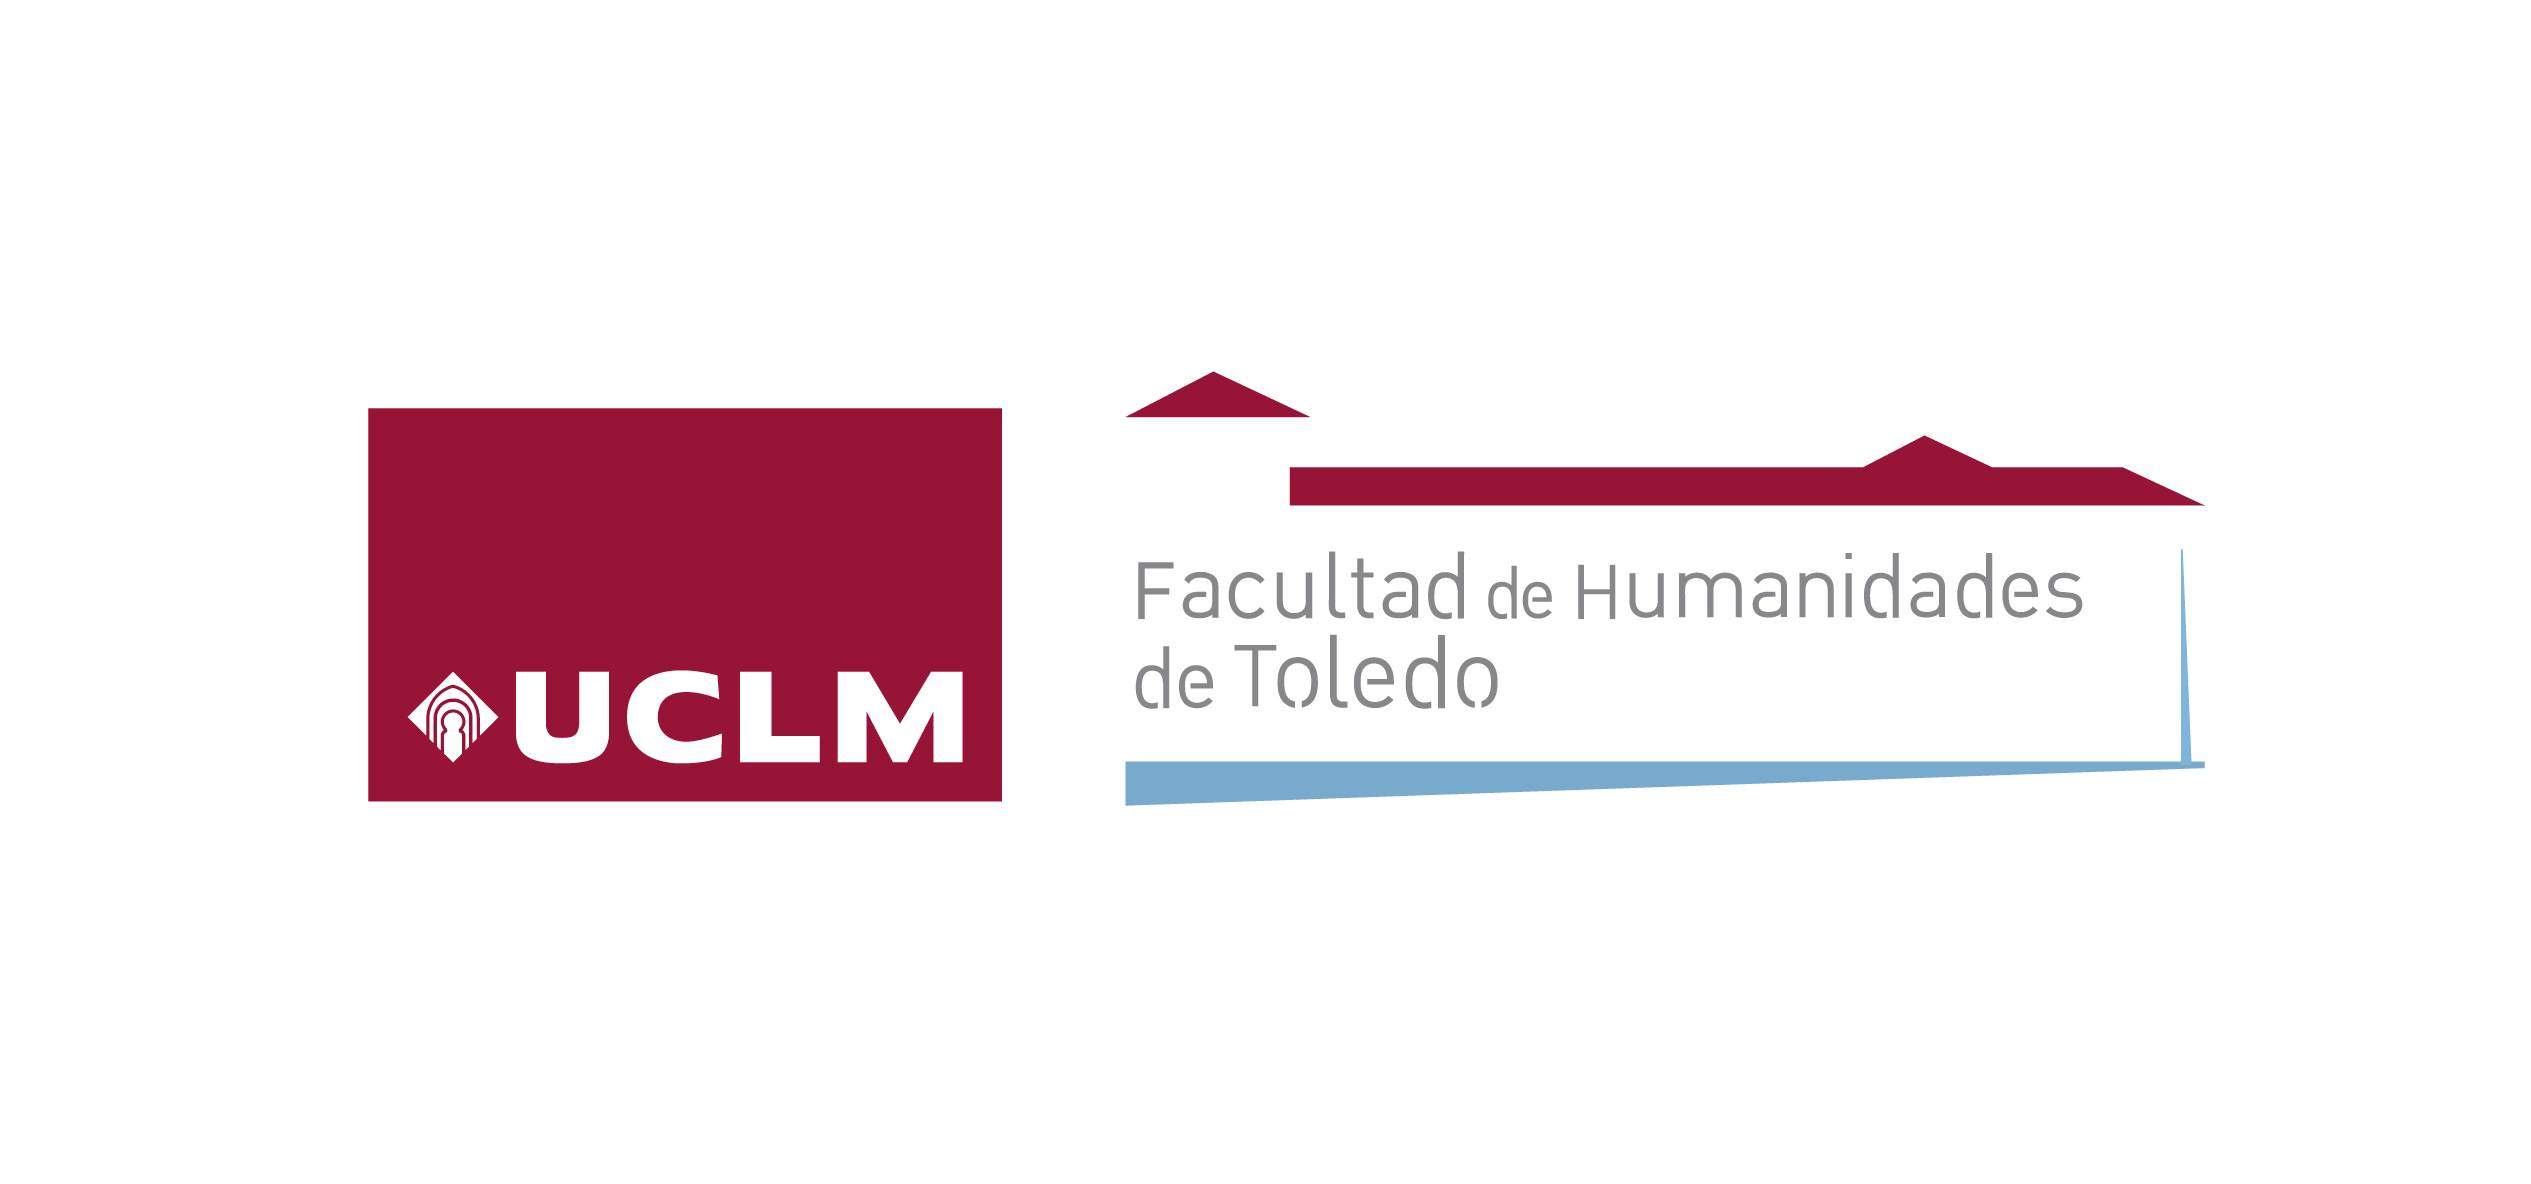 Facultad de Humanidades de Toledo (UCLM) logo